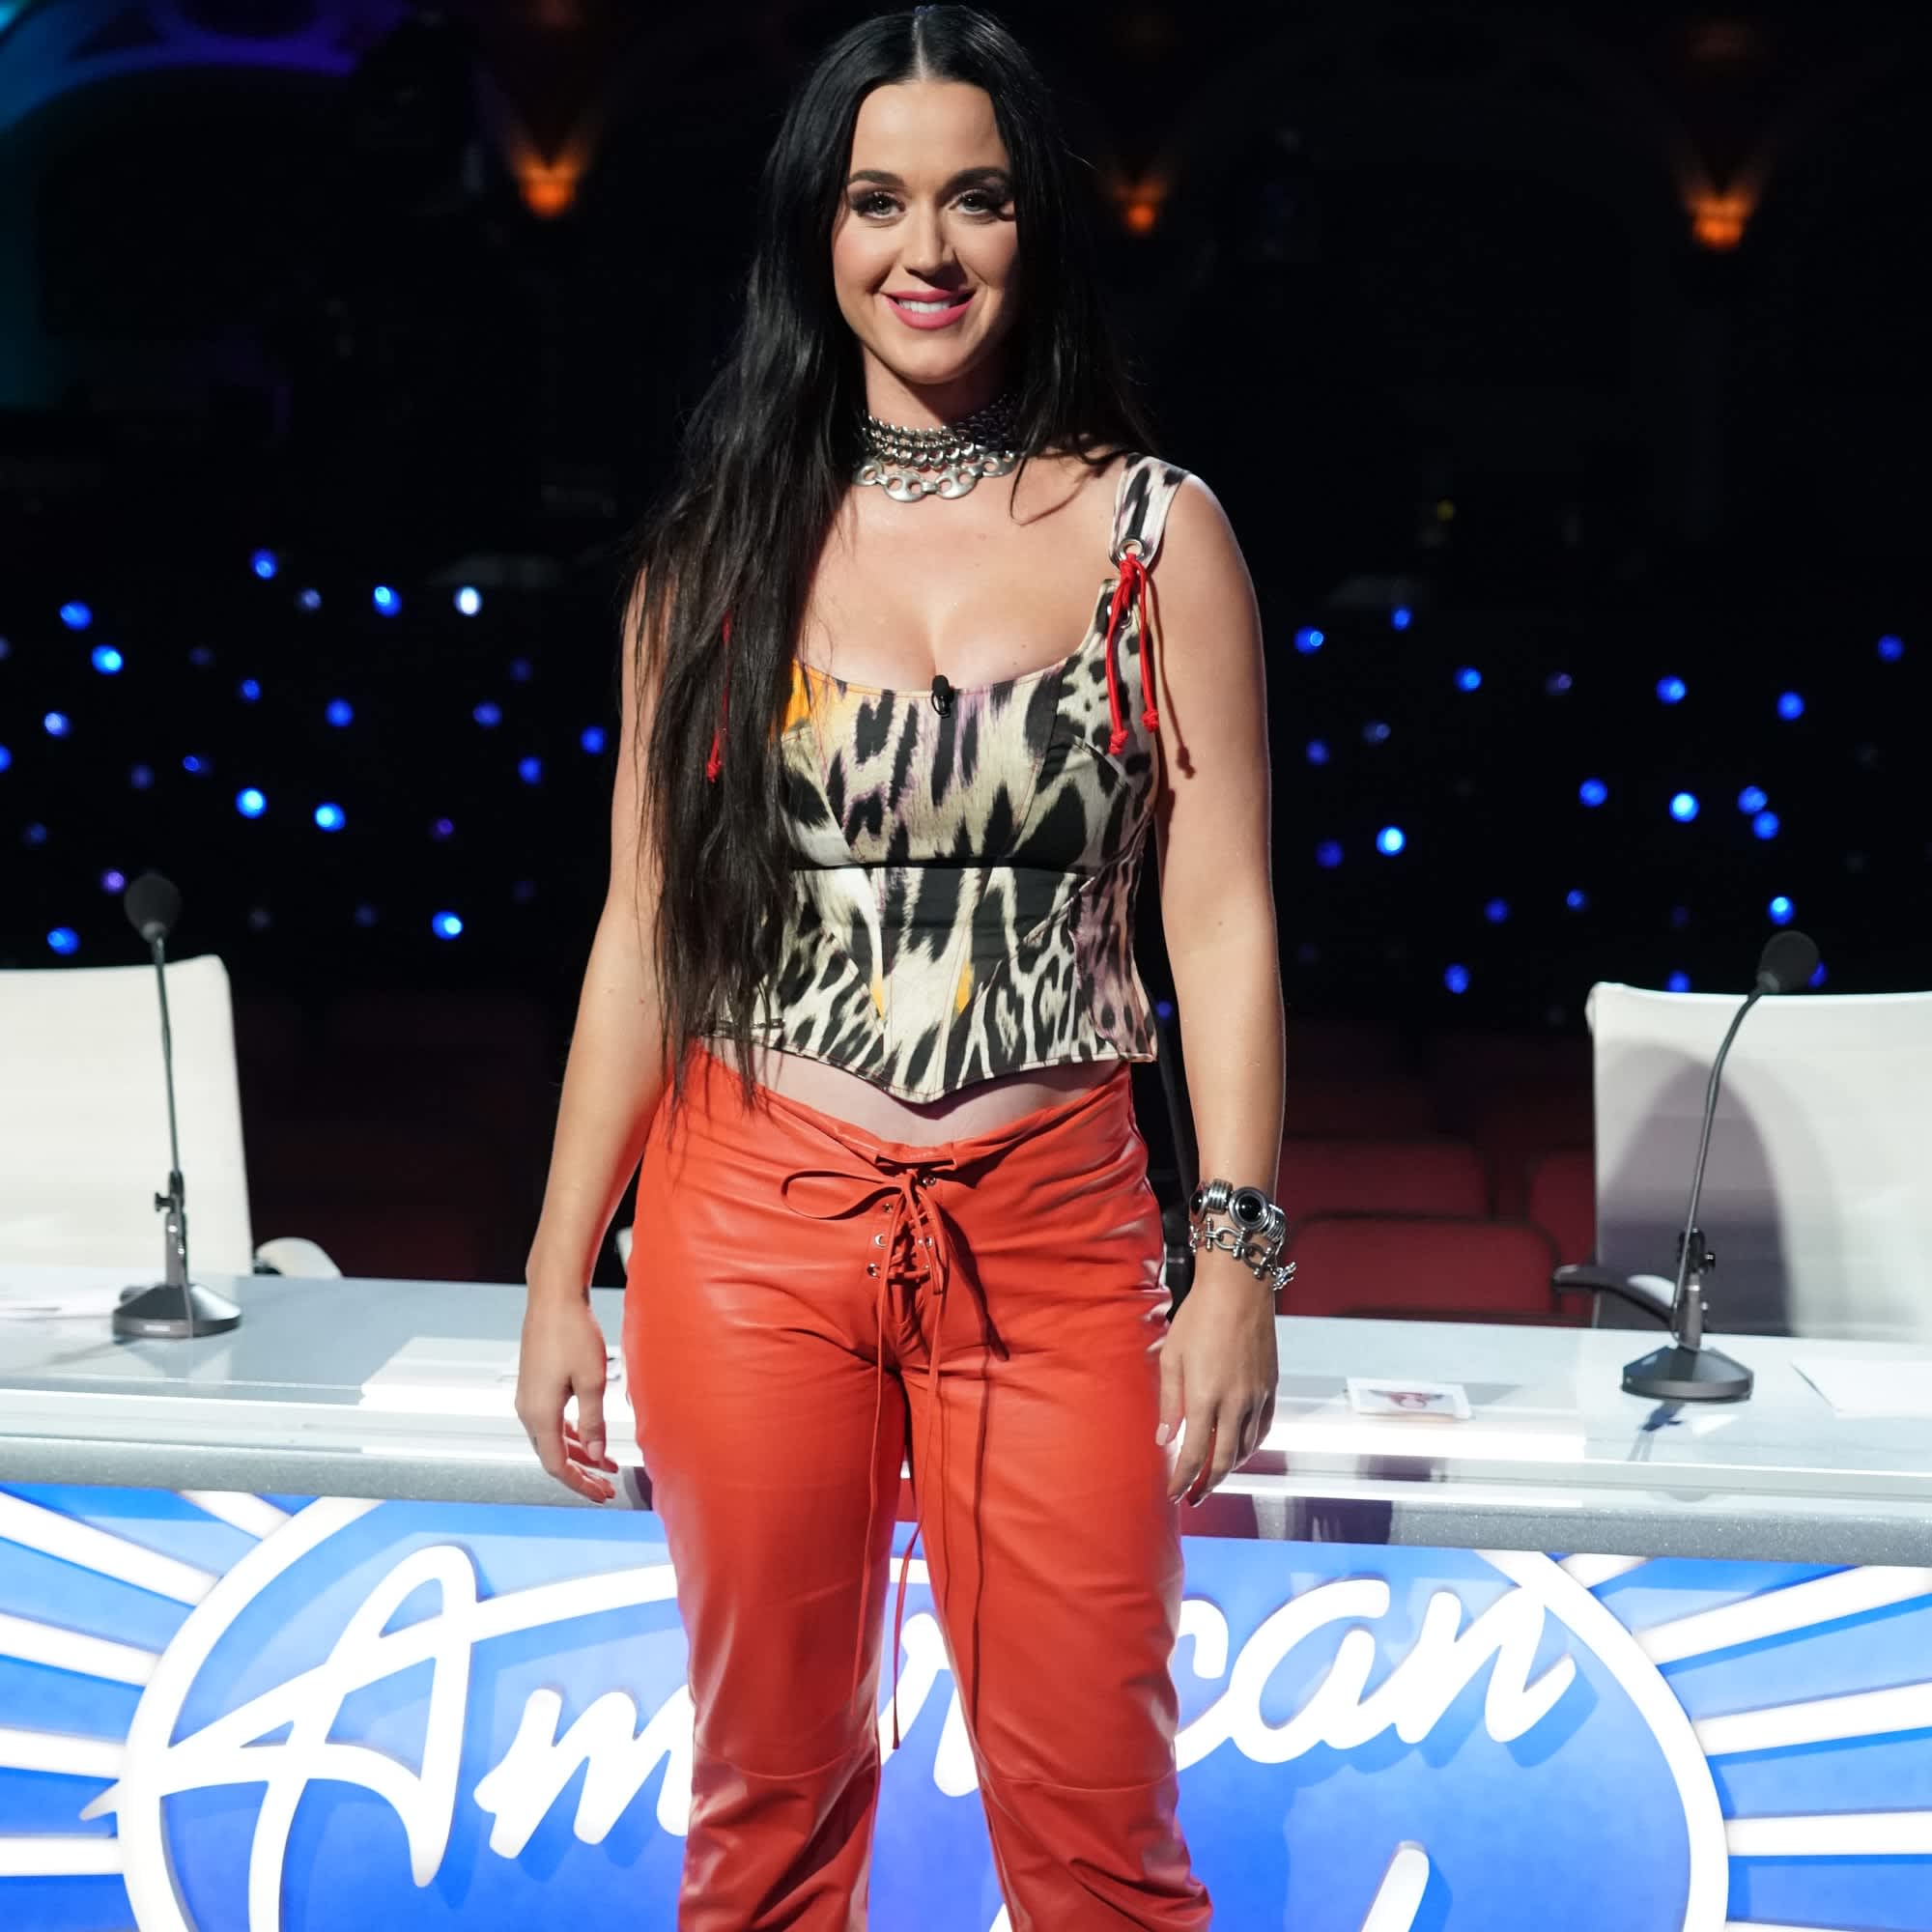 Katy Perry walks red carpet with Orlando Bloom's ex Miranda Kerr